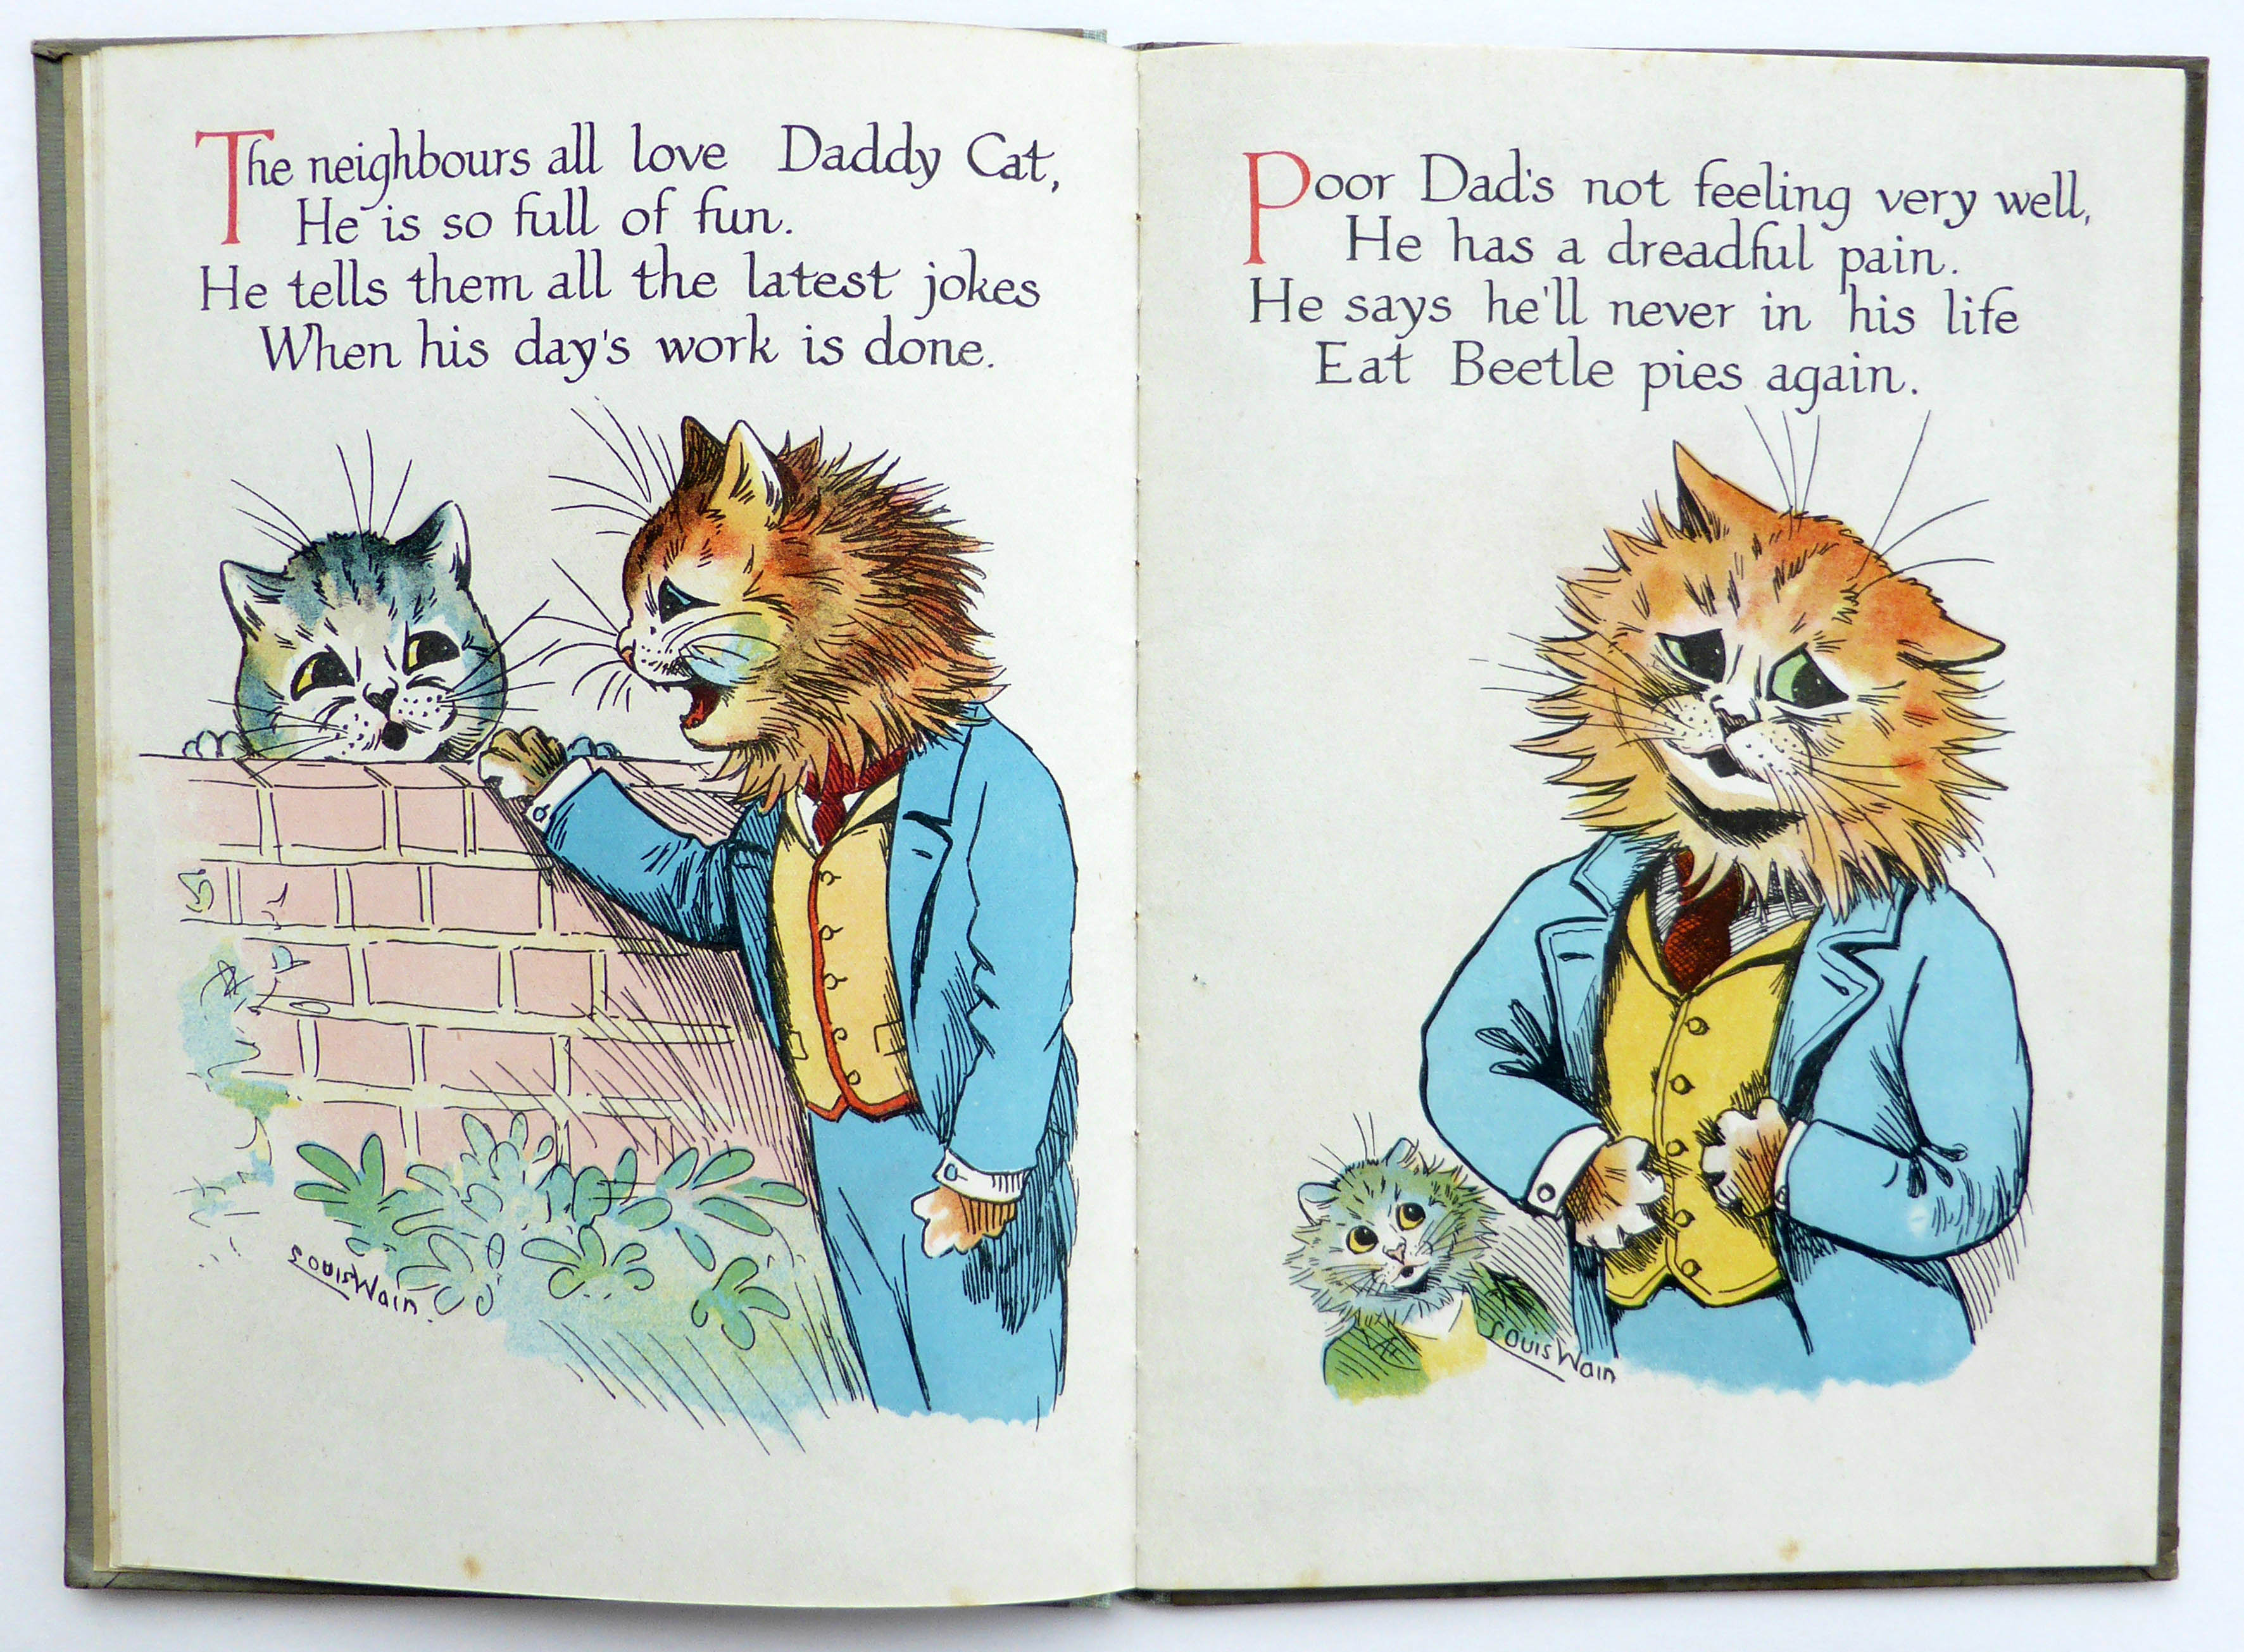 DADDY CAT by Wain, Louis: Near Fine Hardcover (1925)